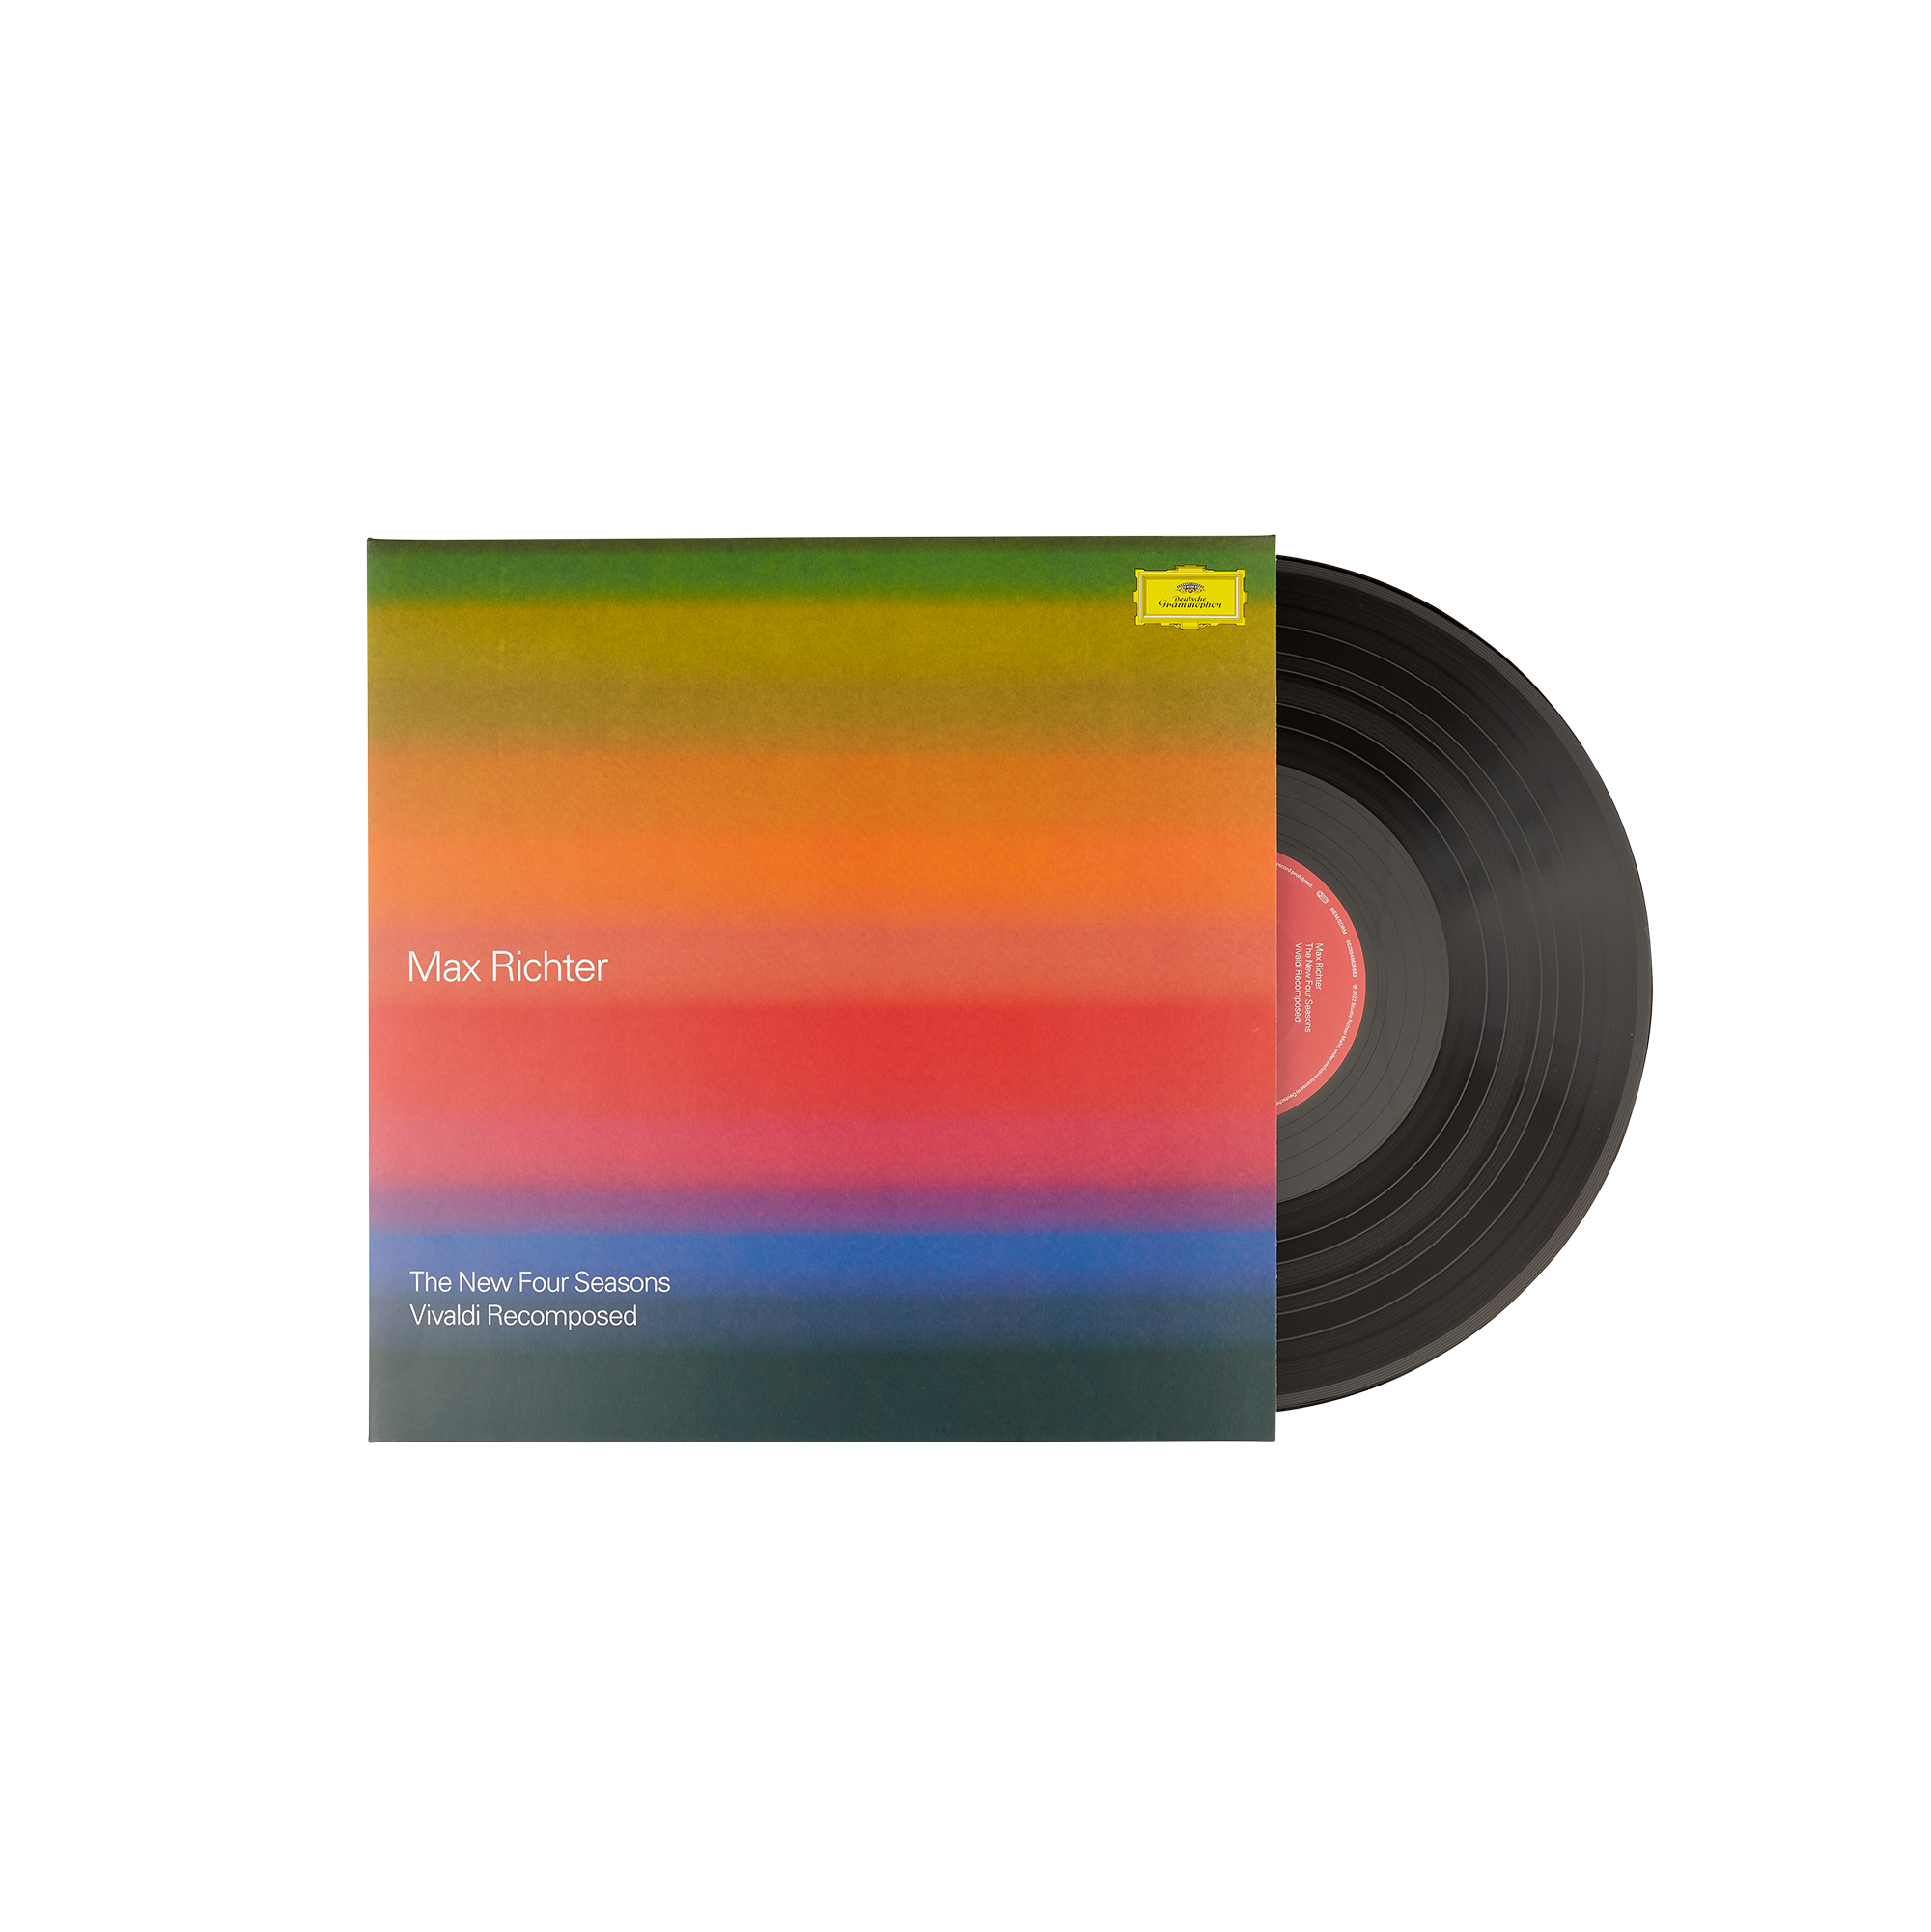 Max Richter - The New Four Seasons - Vivaldi Recomposed: Vinyl LP